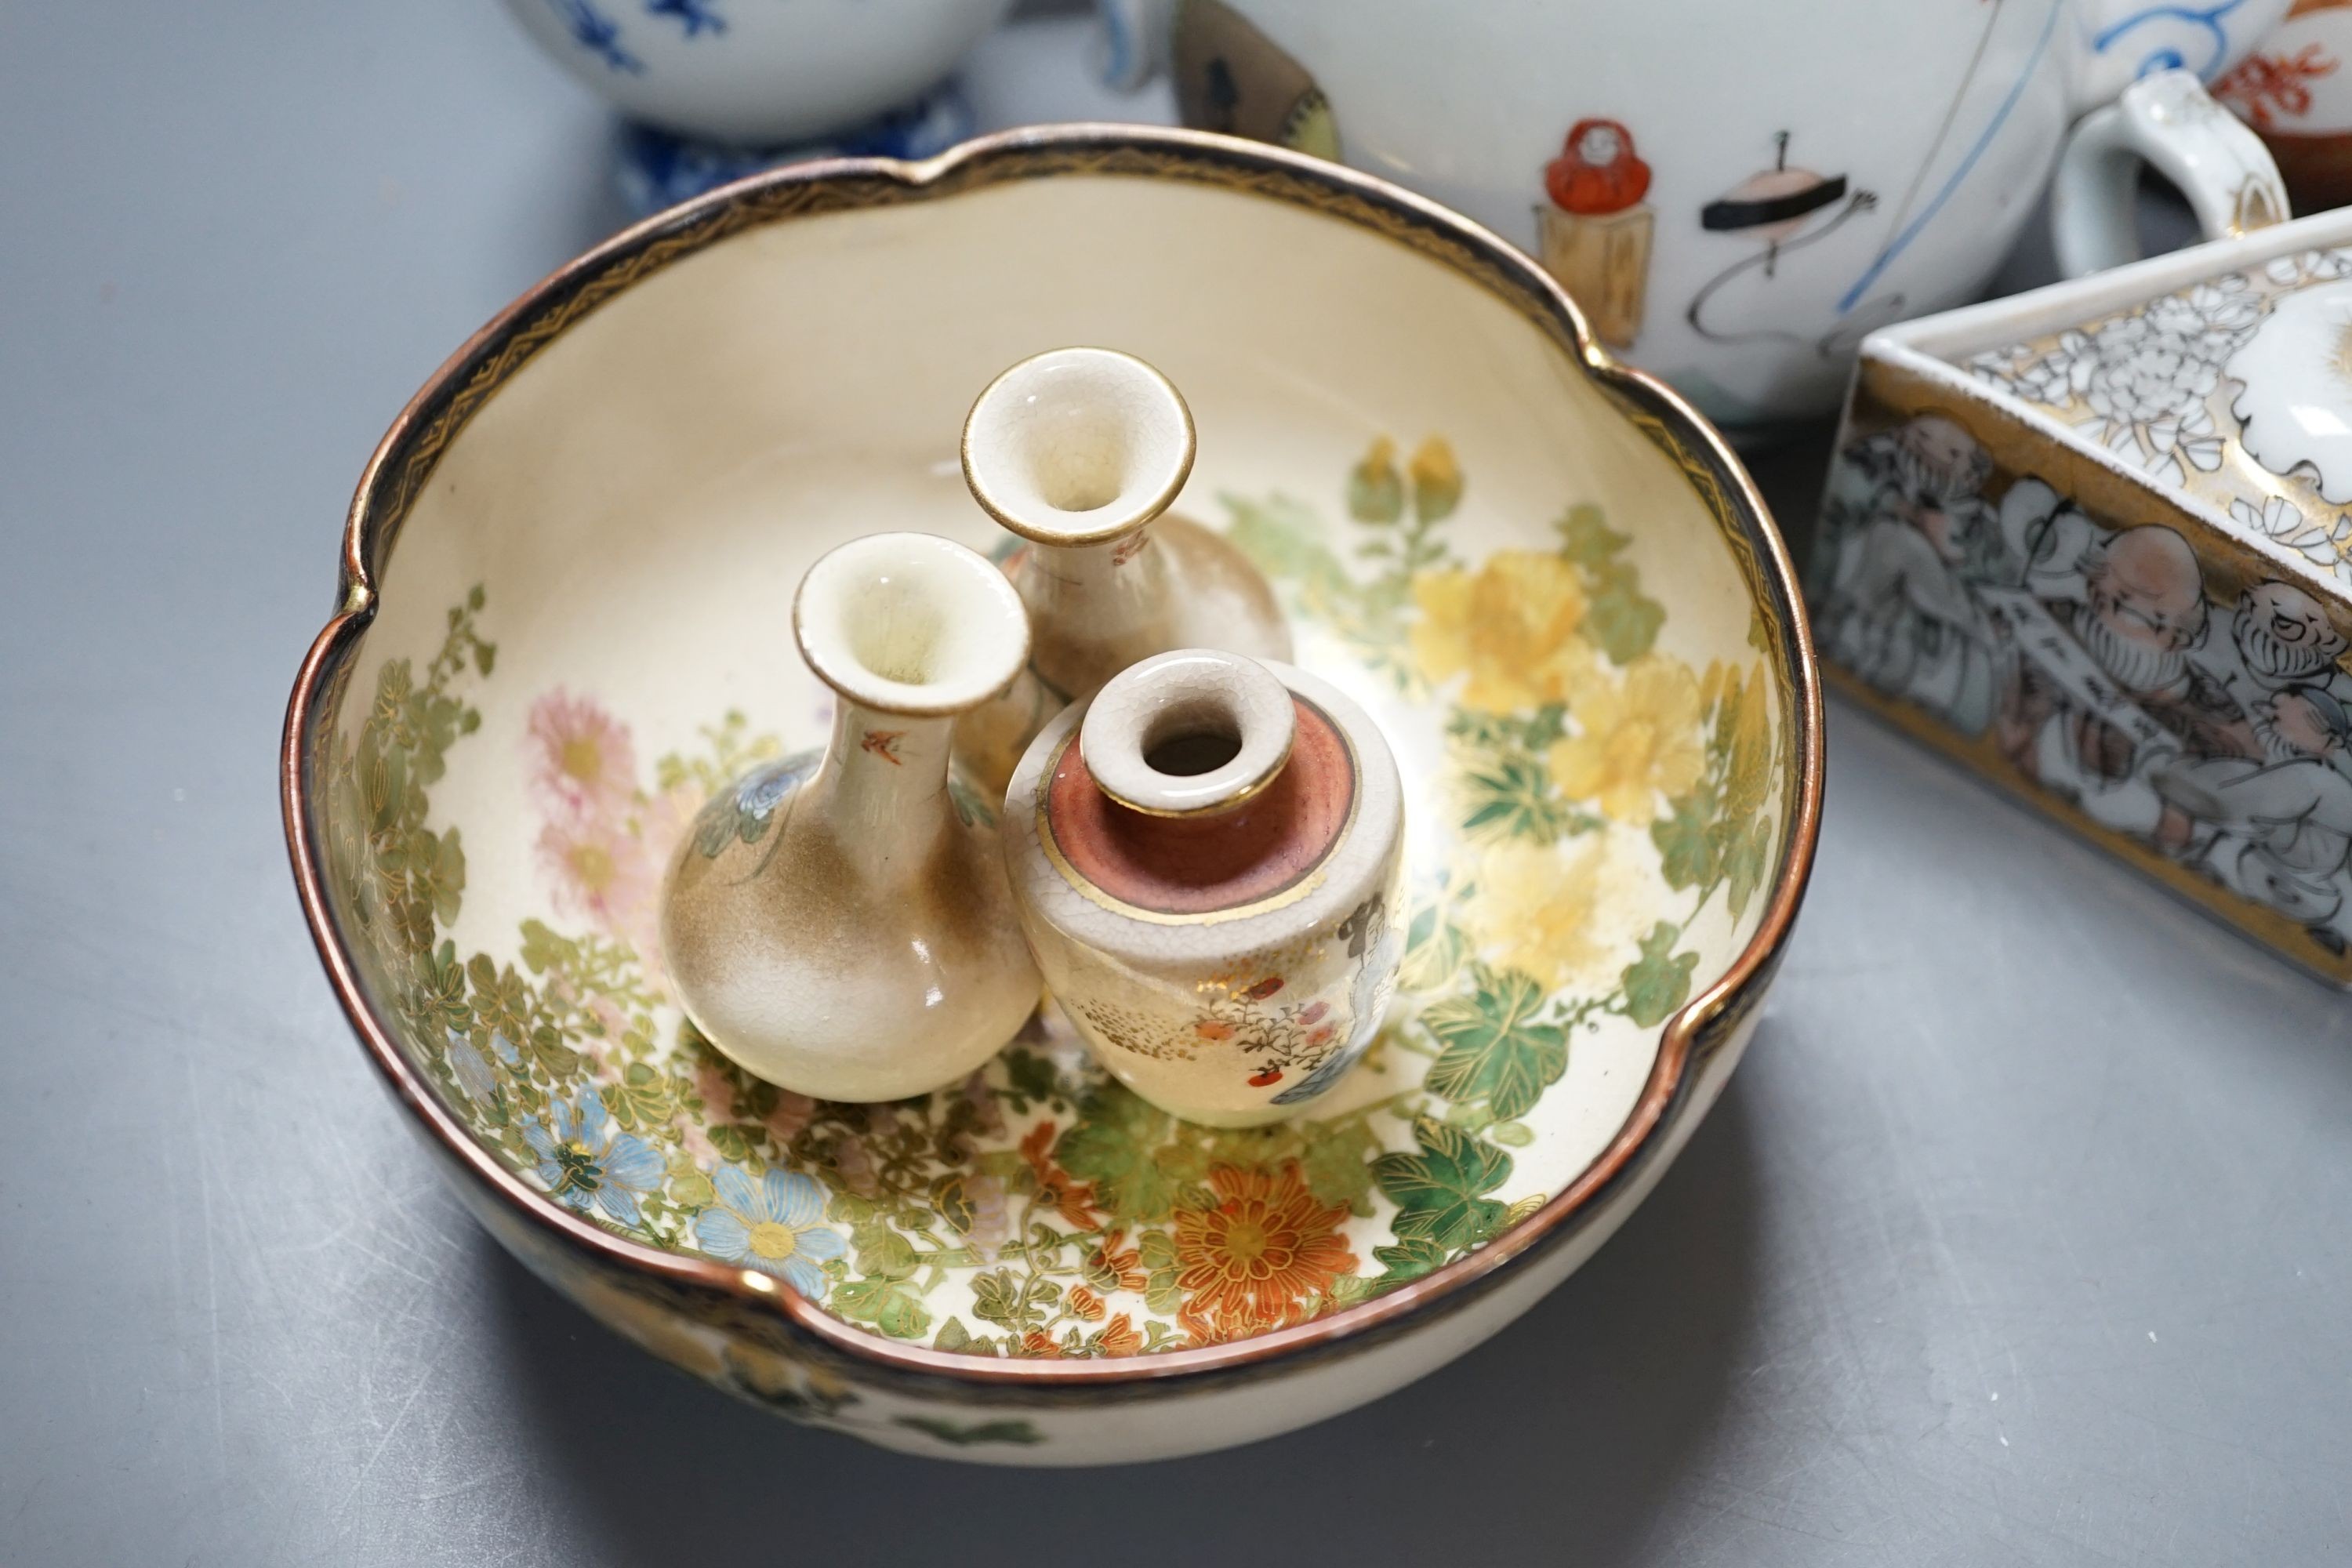 A group of Japanese ceramics 21cm